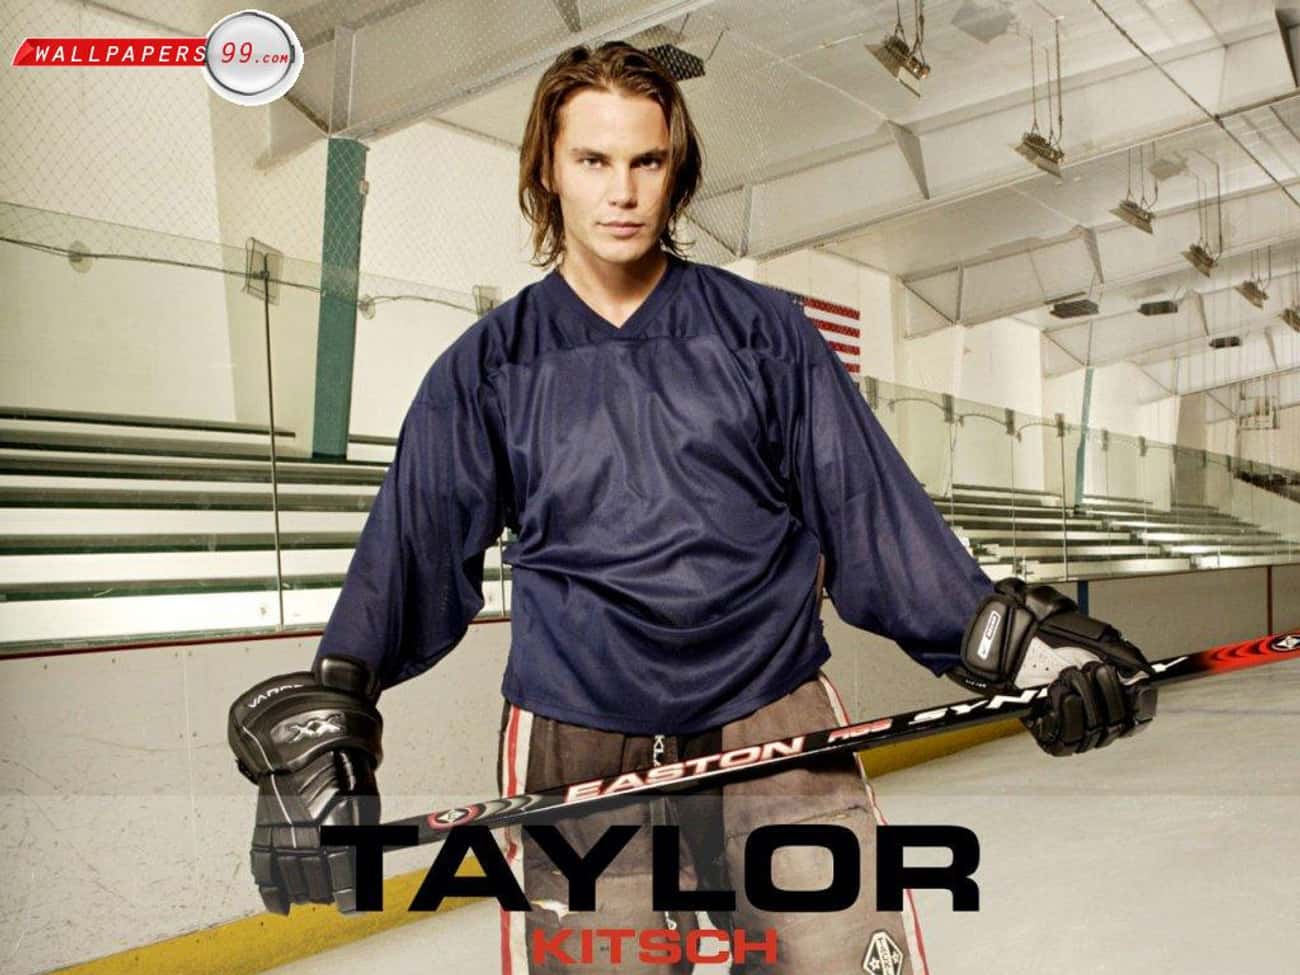 Taylor Kitsch in Satin Hockey Uniform